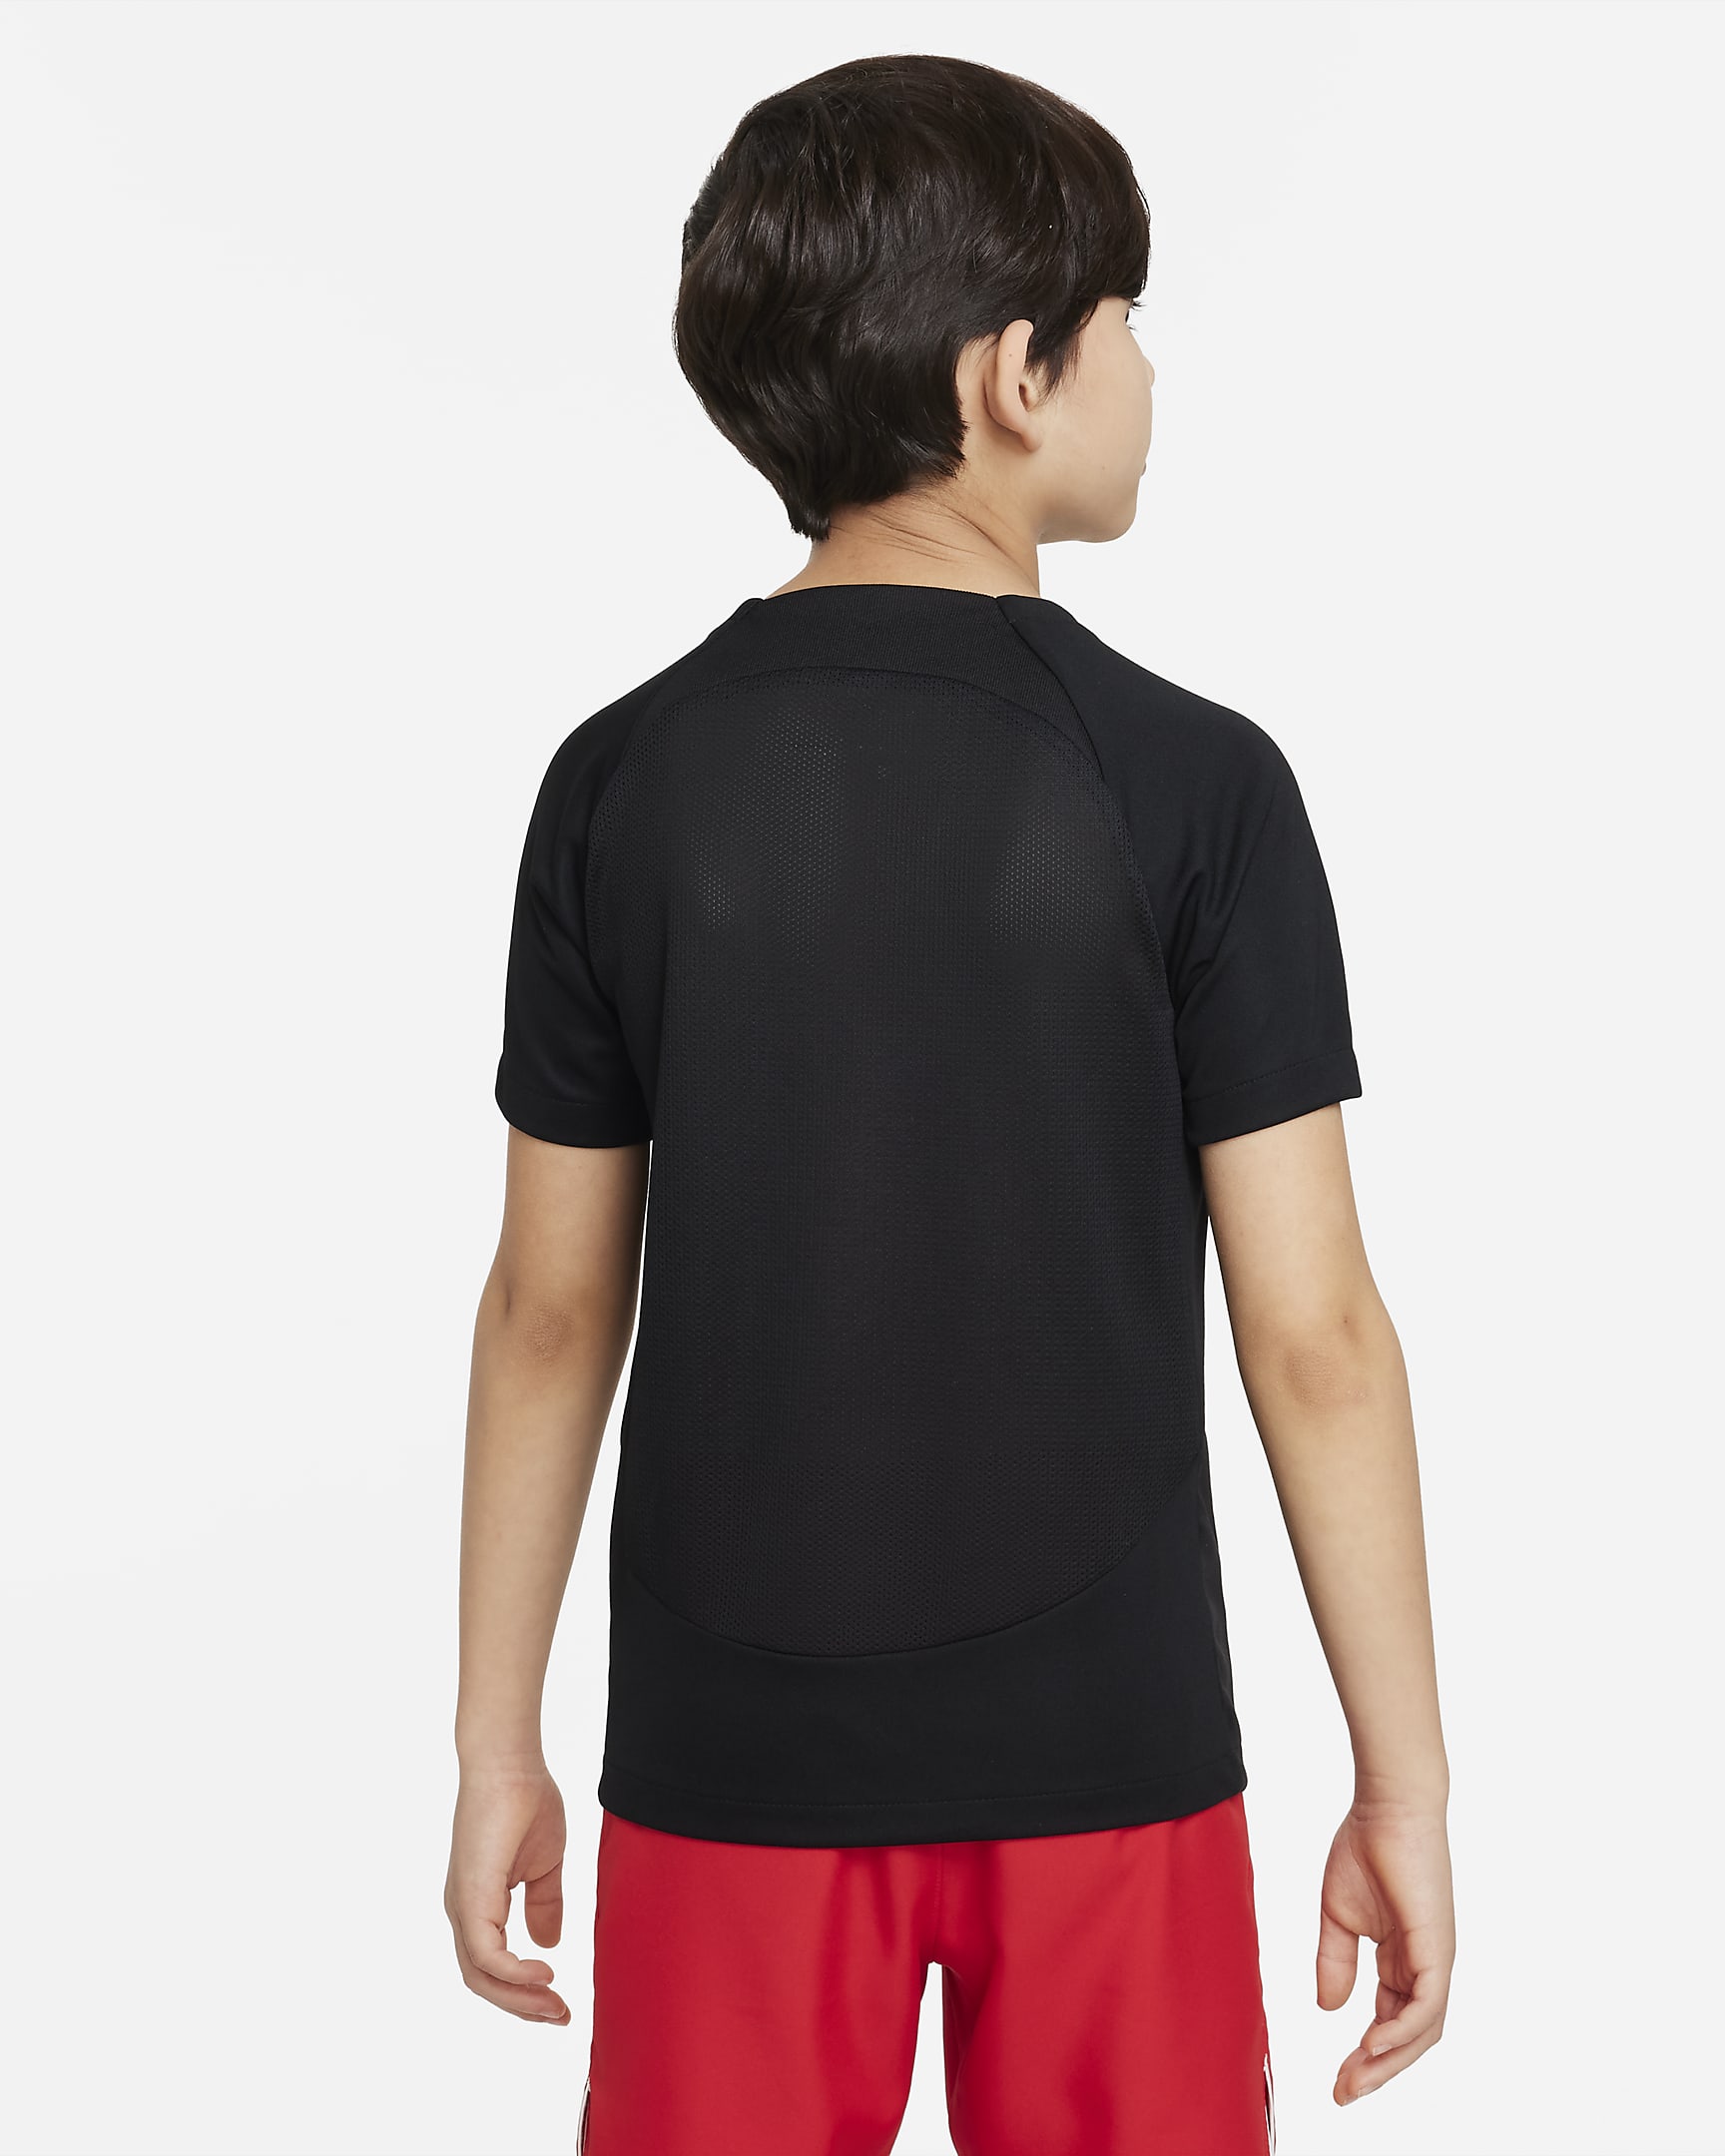 U.S. Academy Pro Big Kids' Nike Dri-FIT Short-Sleeve Soccer Top. Nike.com